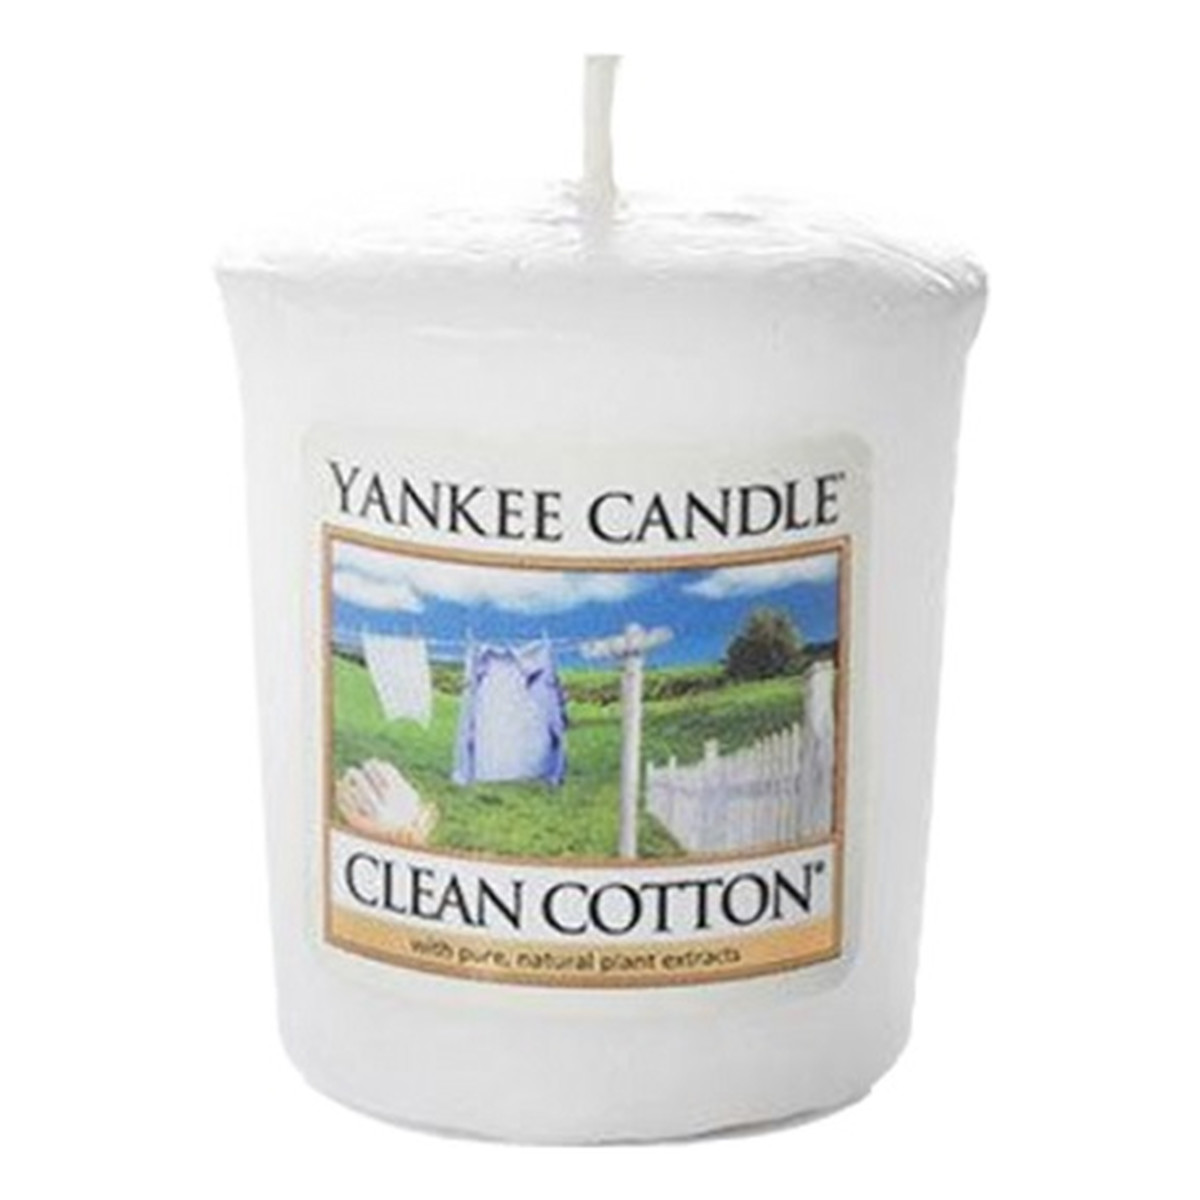 Yankee Candle Świeca zapachowa sampler clean cotton 49g